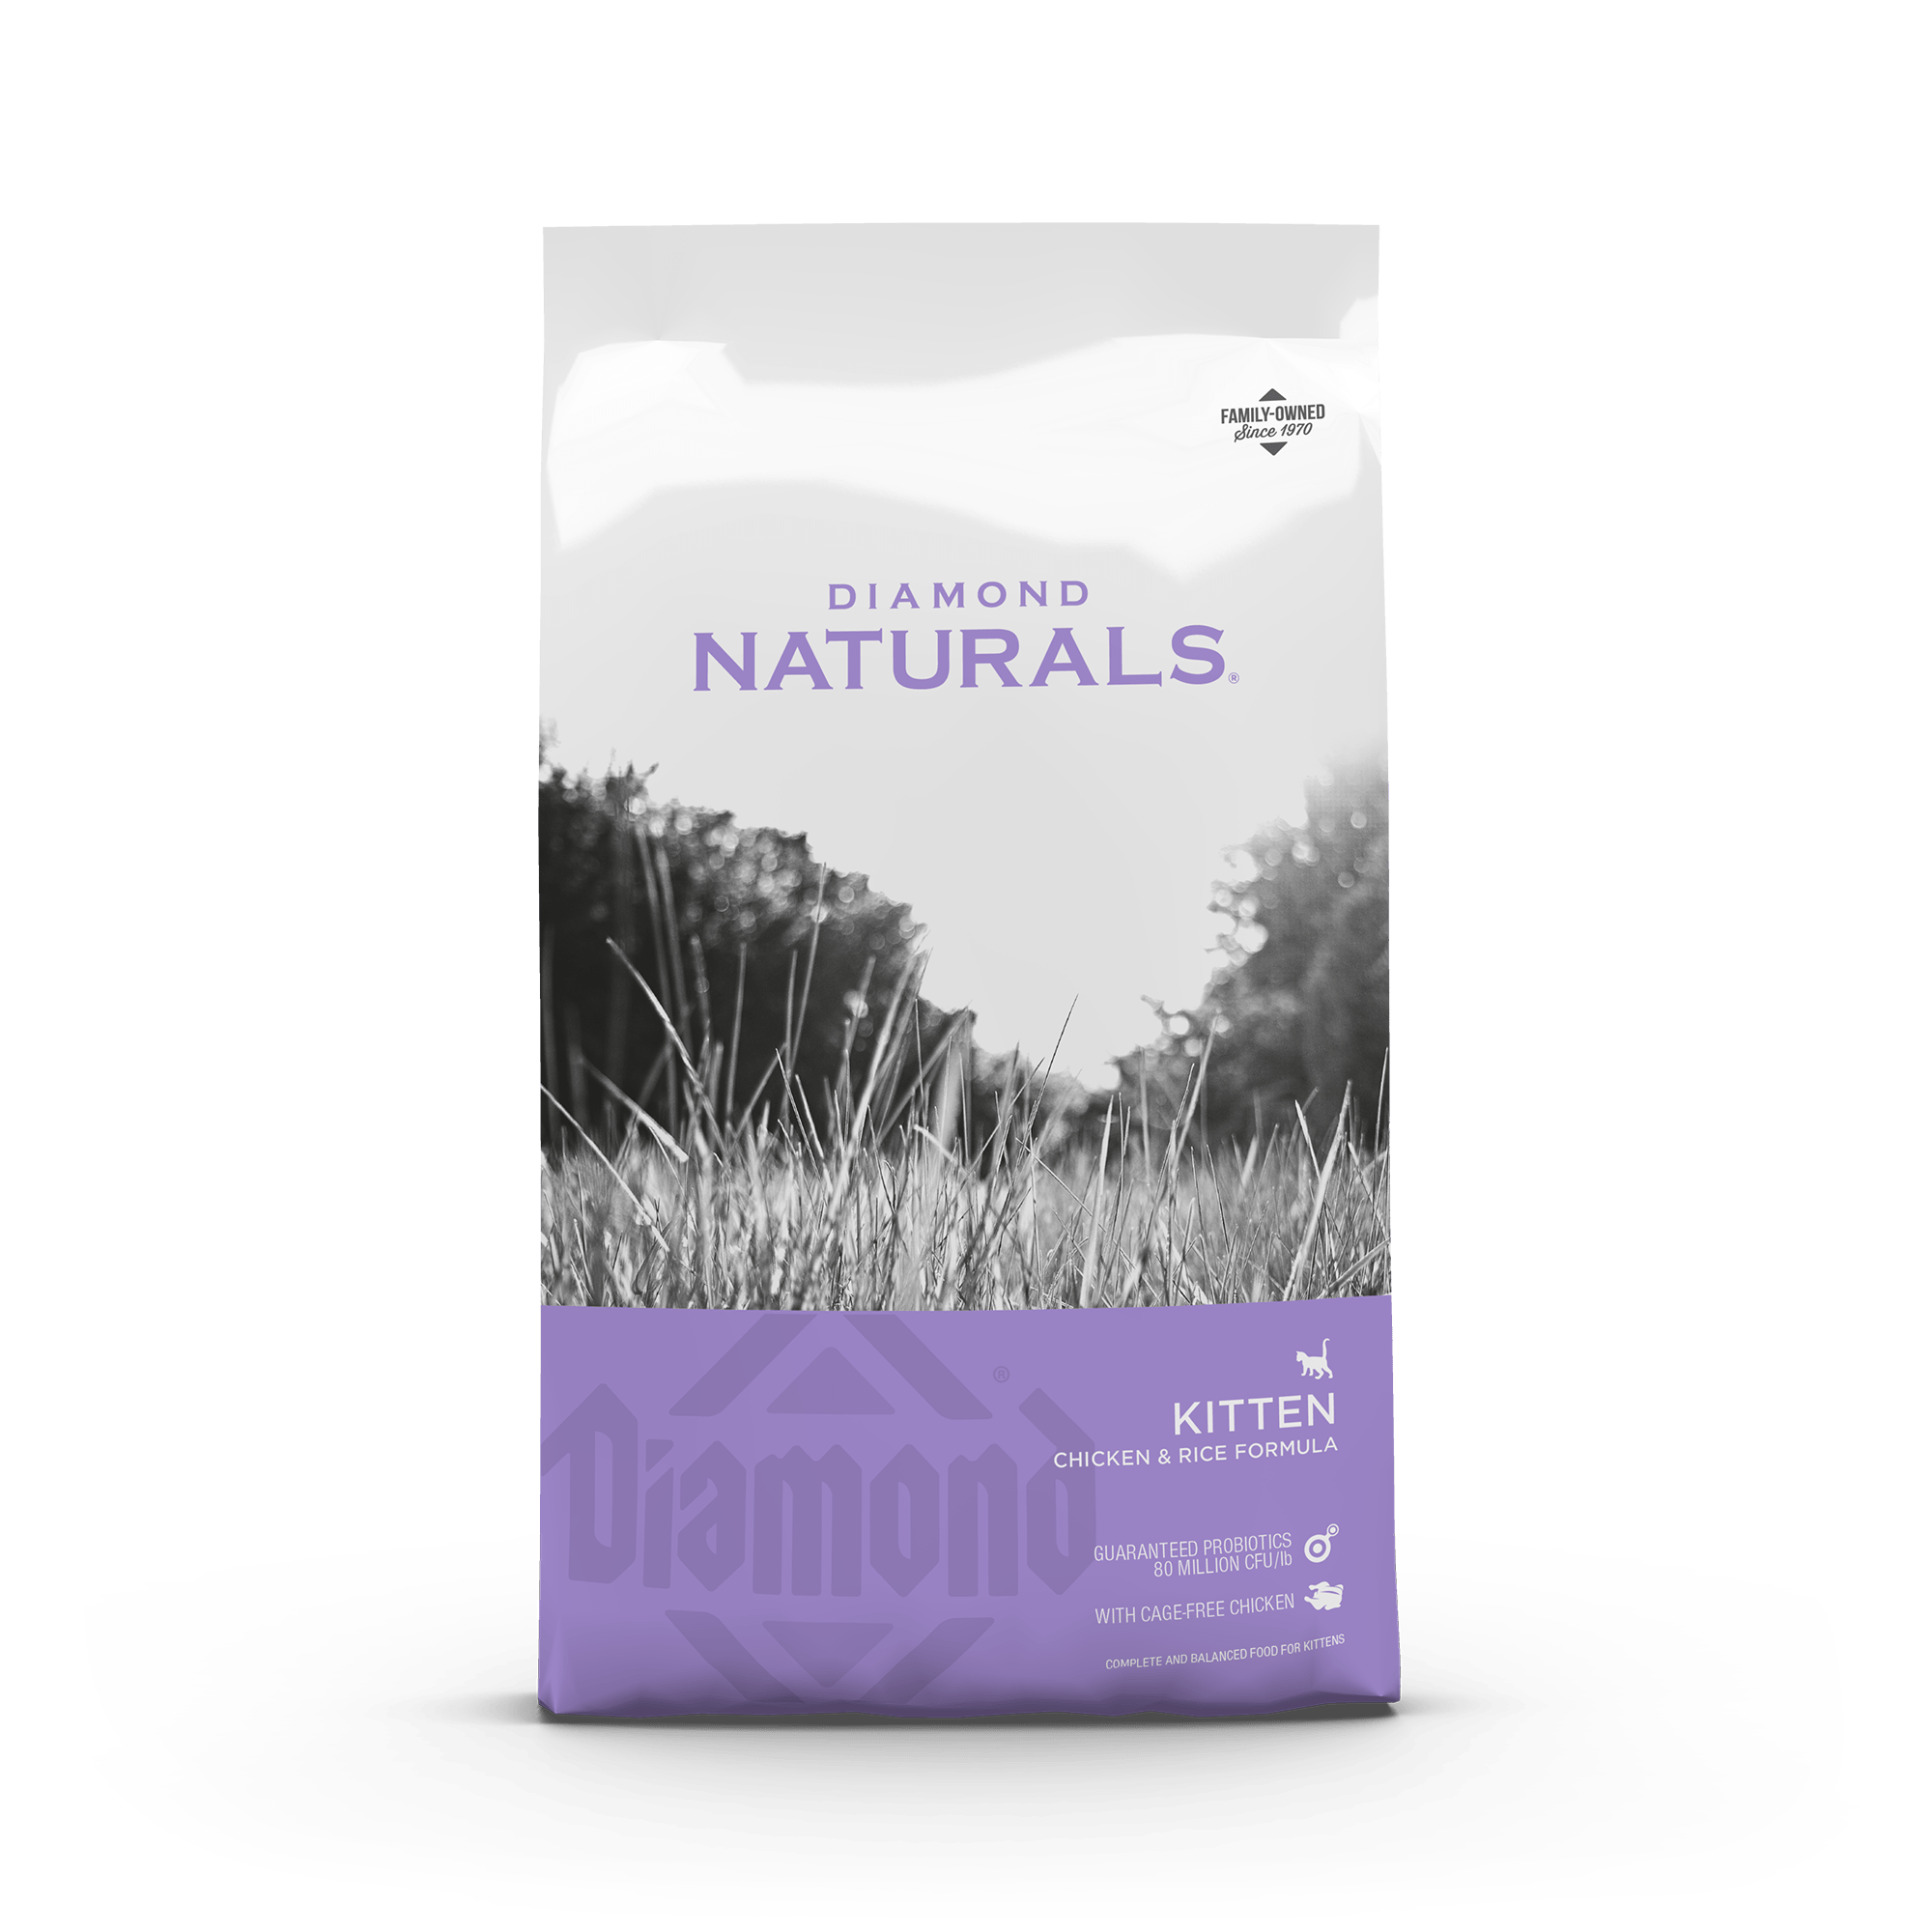 Diamond Naturals Kitten Chicken & Rice Formula product packaging